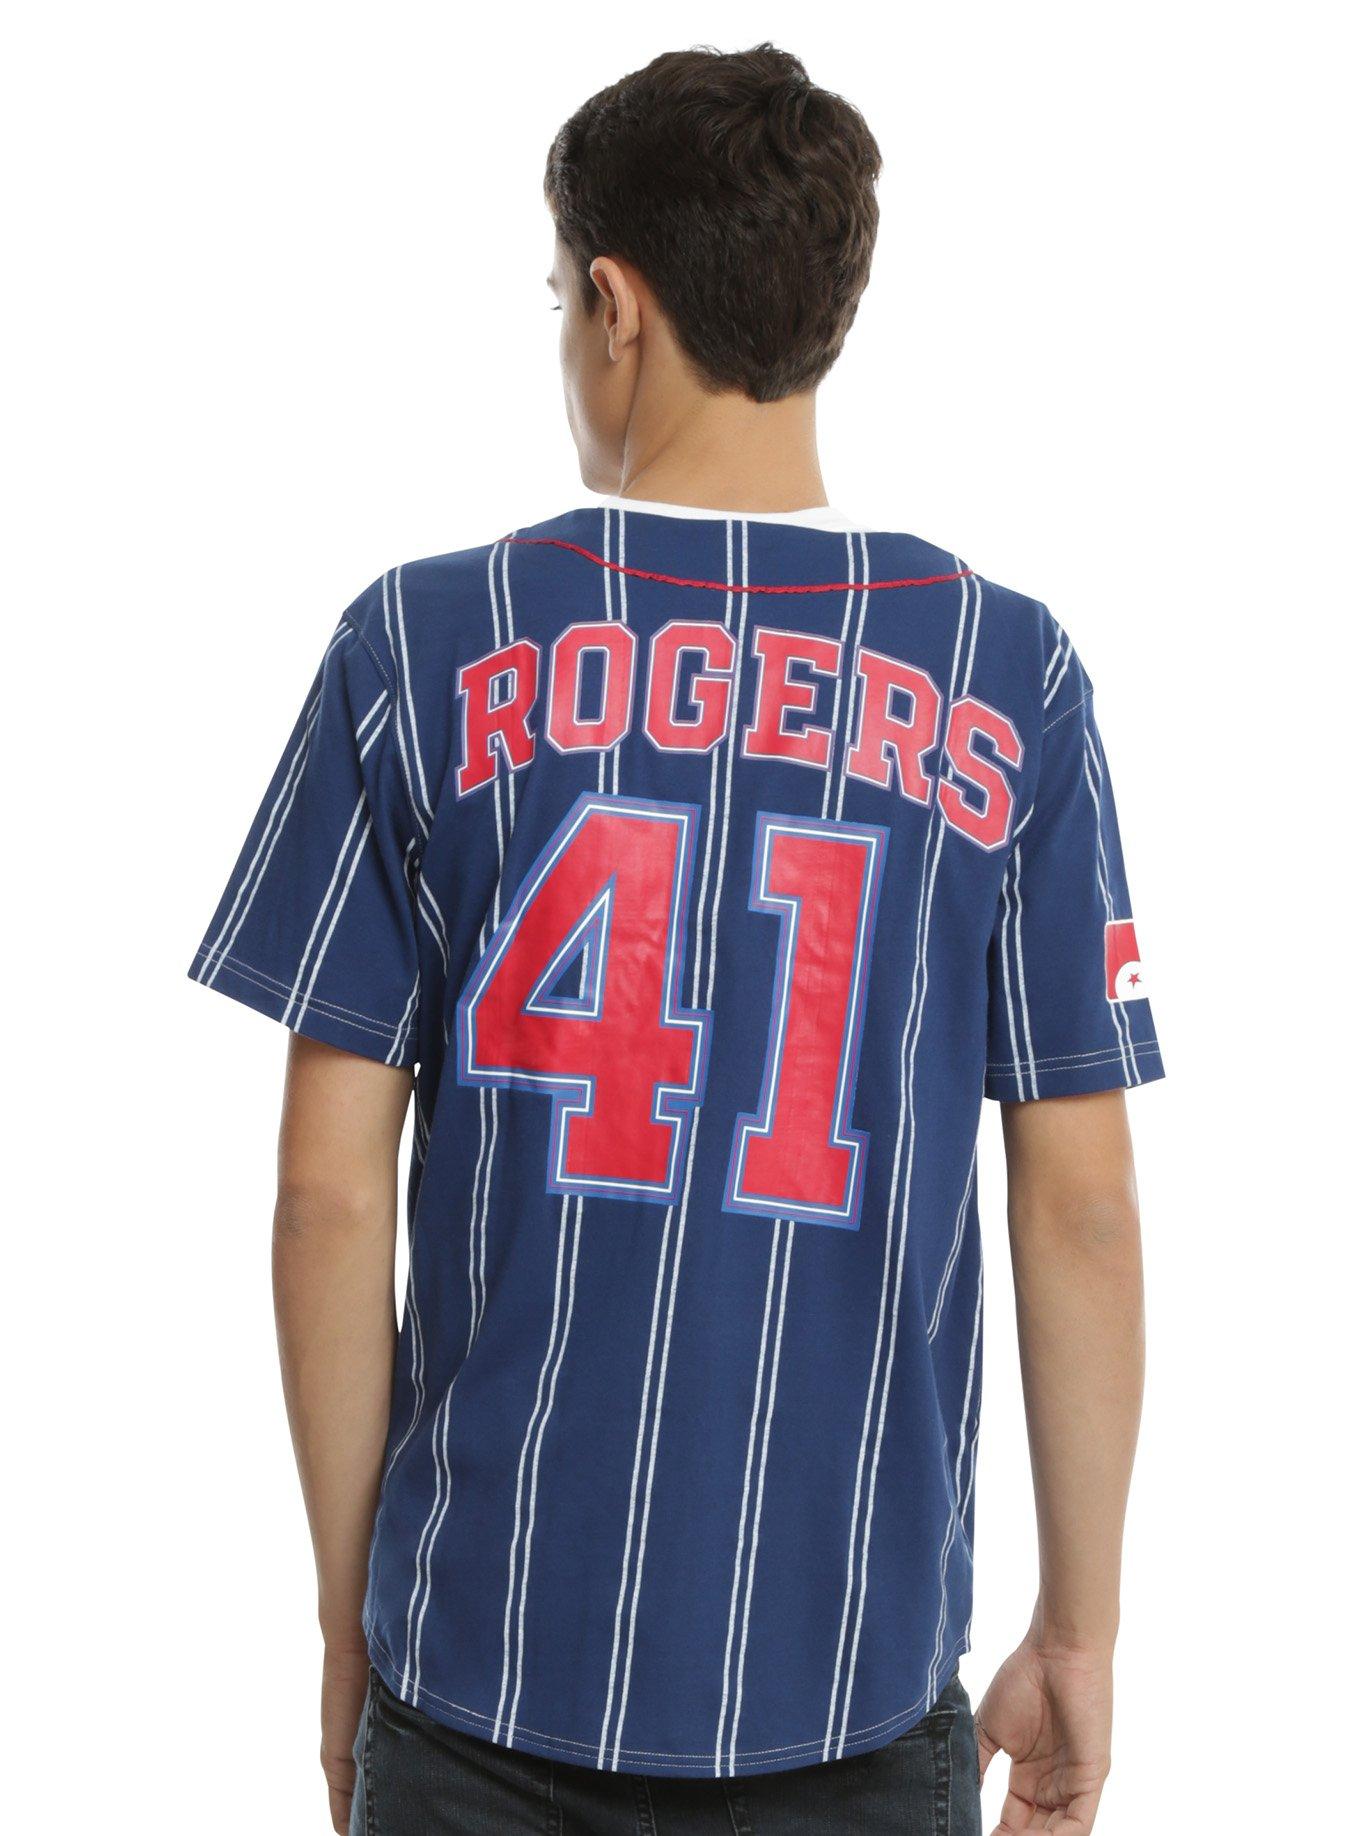 rogers baseball jersey